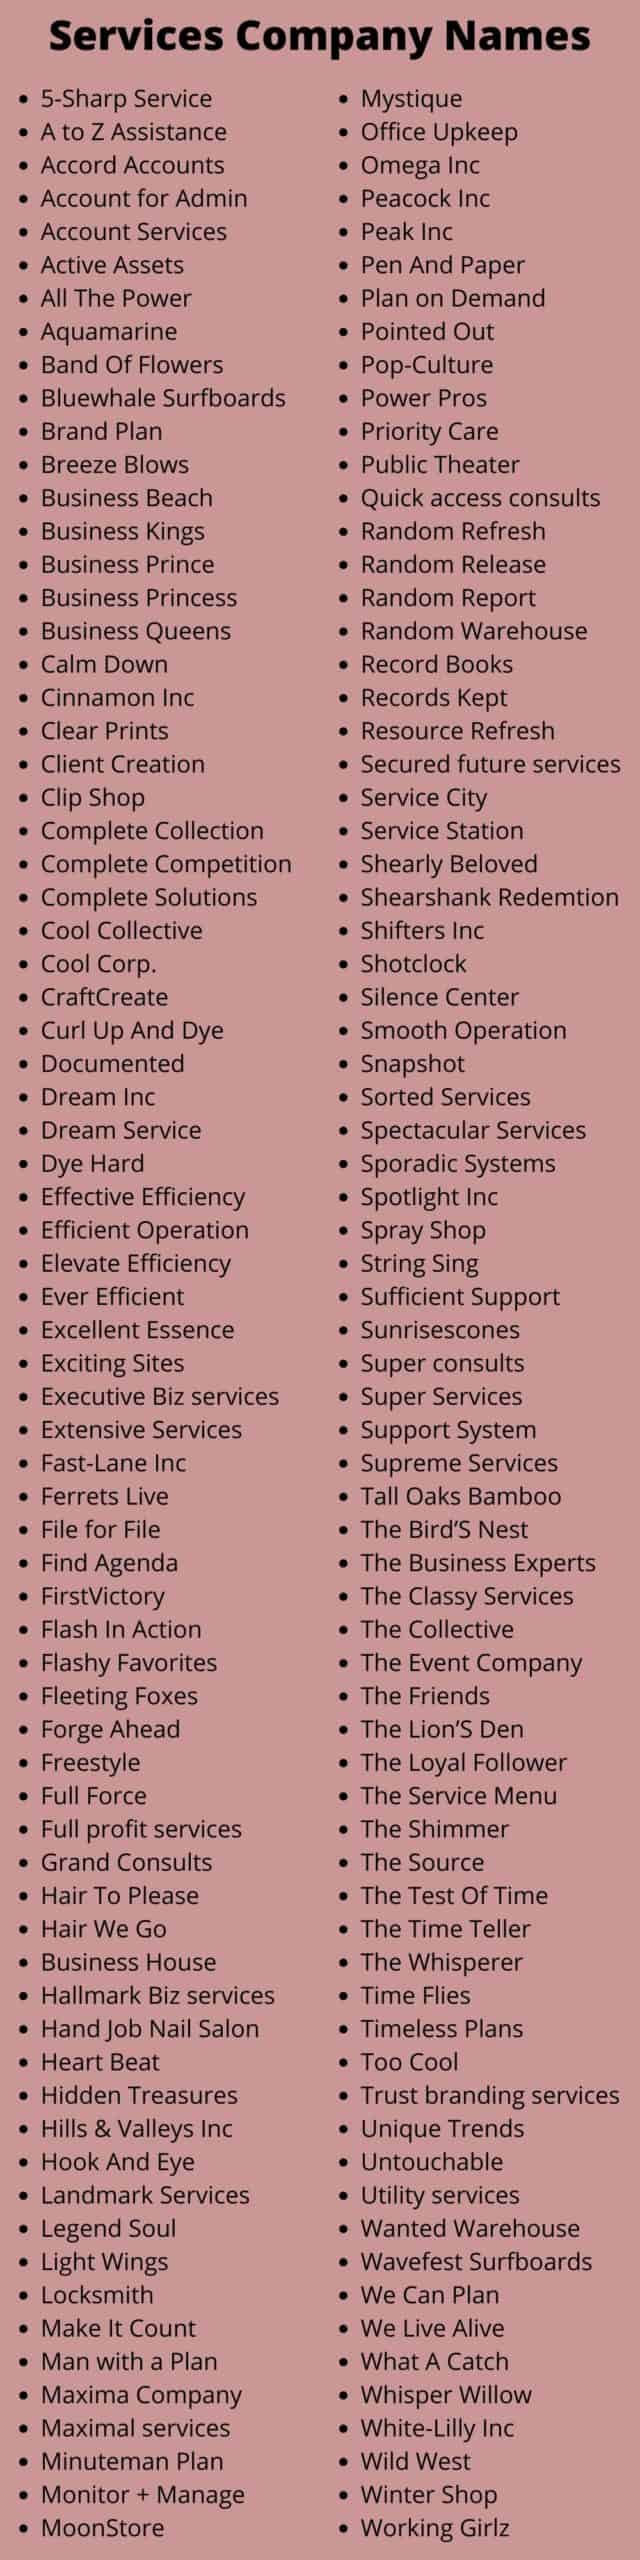 Services Company Names